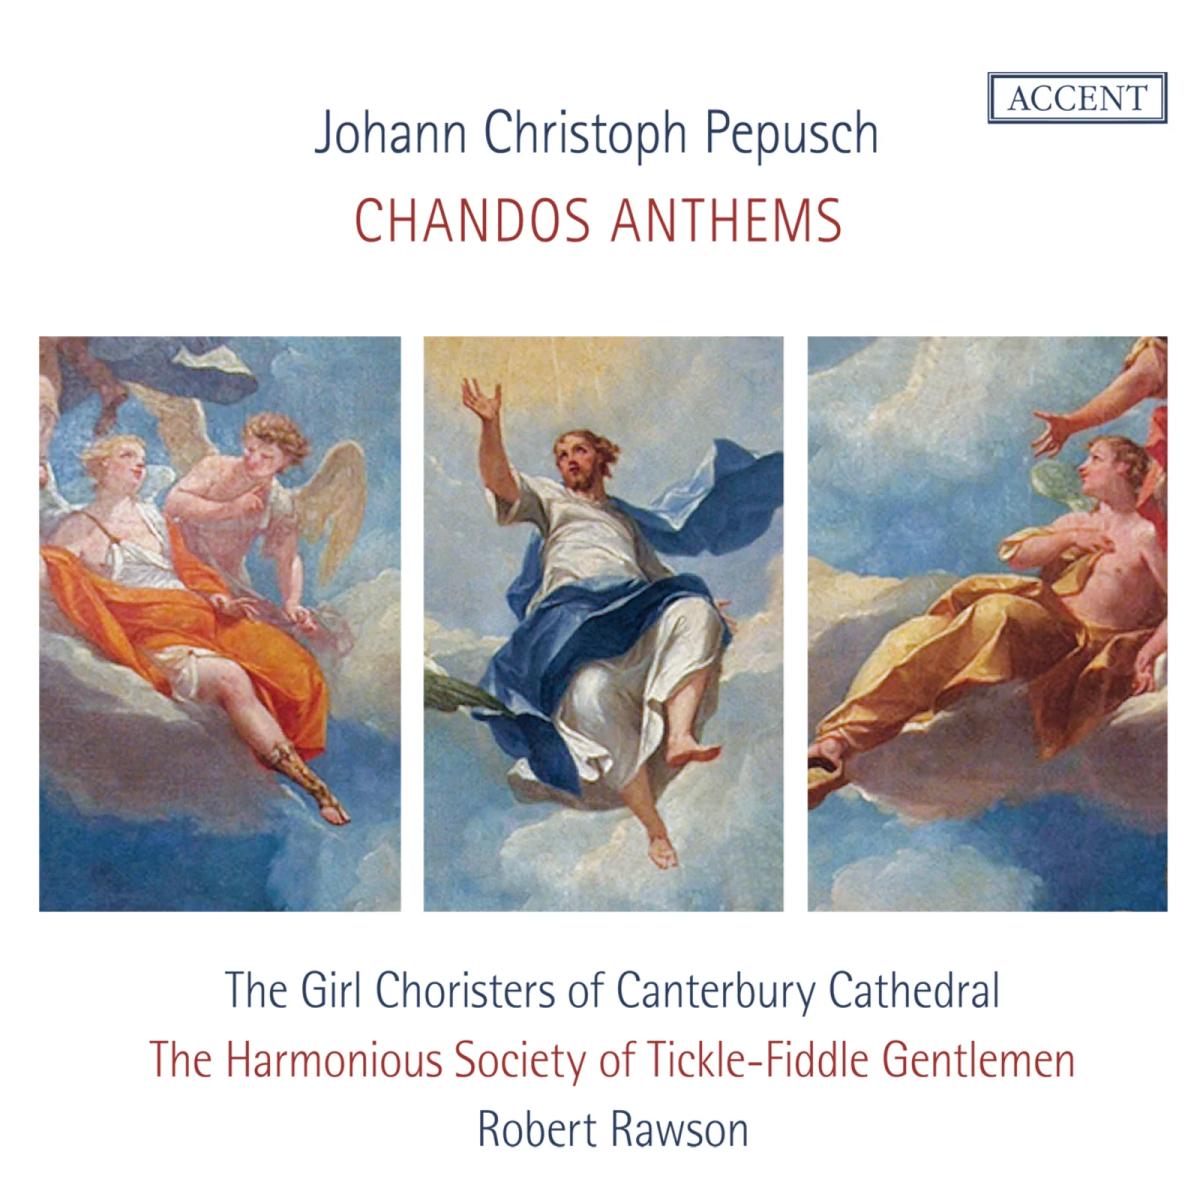 Johann Christoph Pepusch: Chandos Anthems